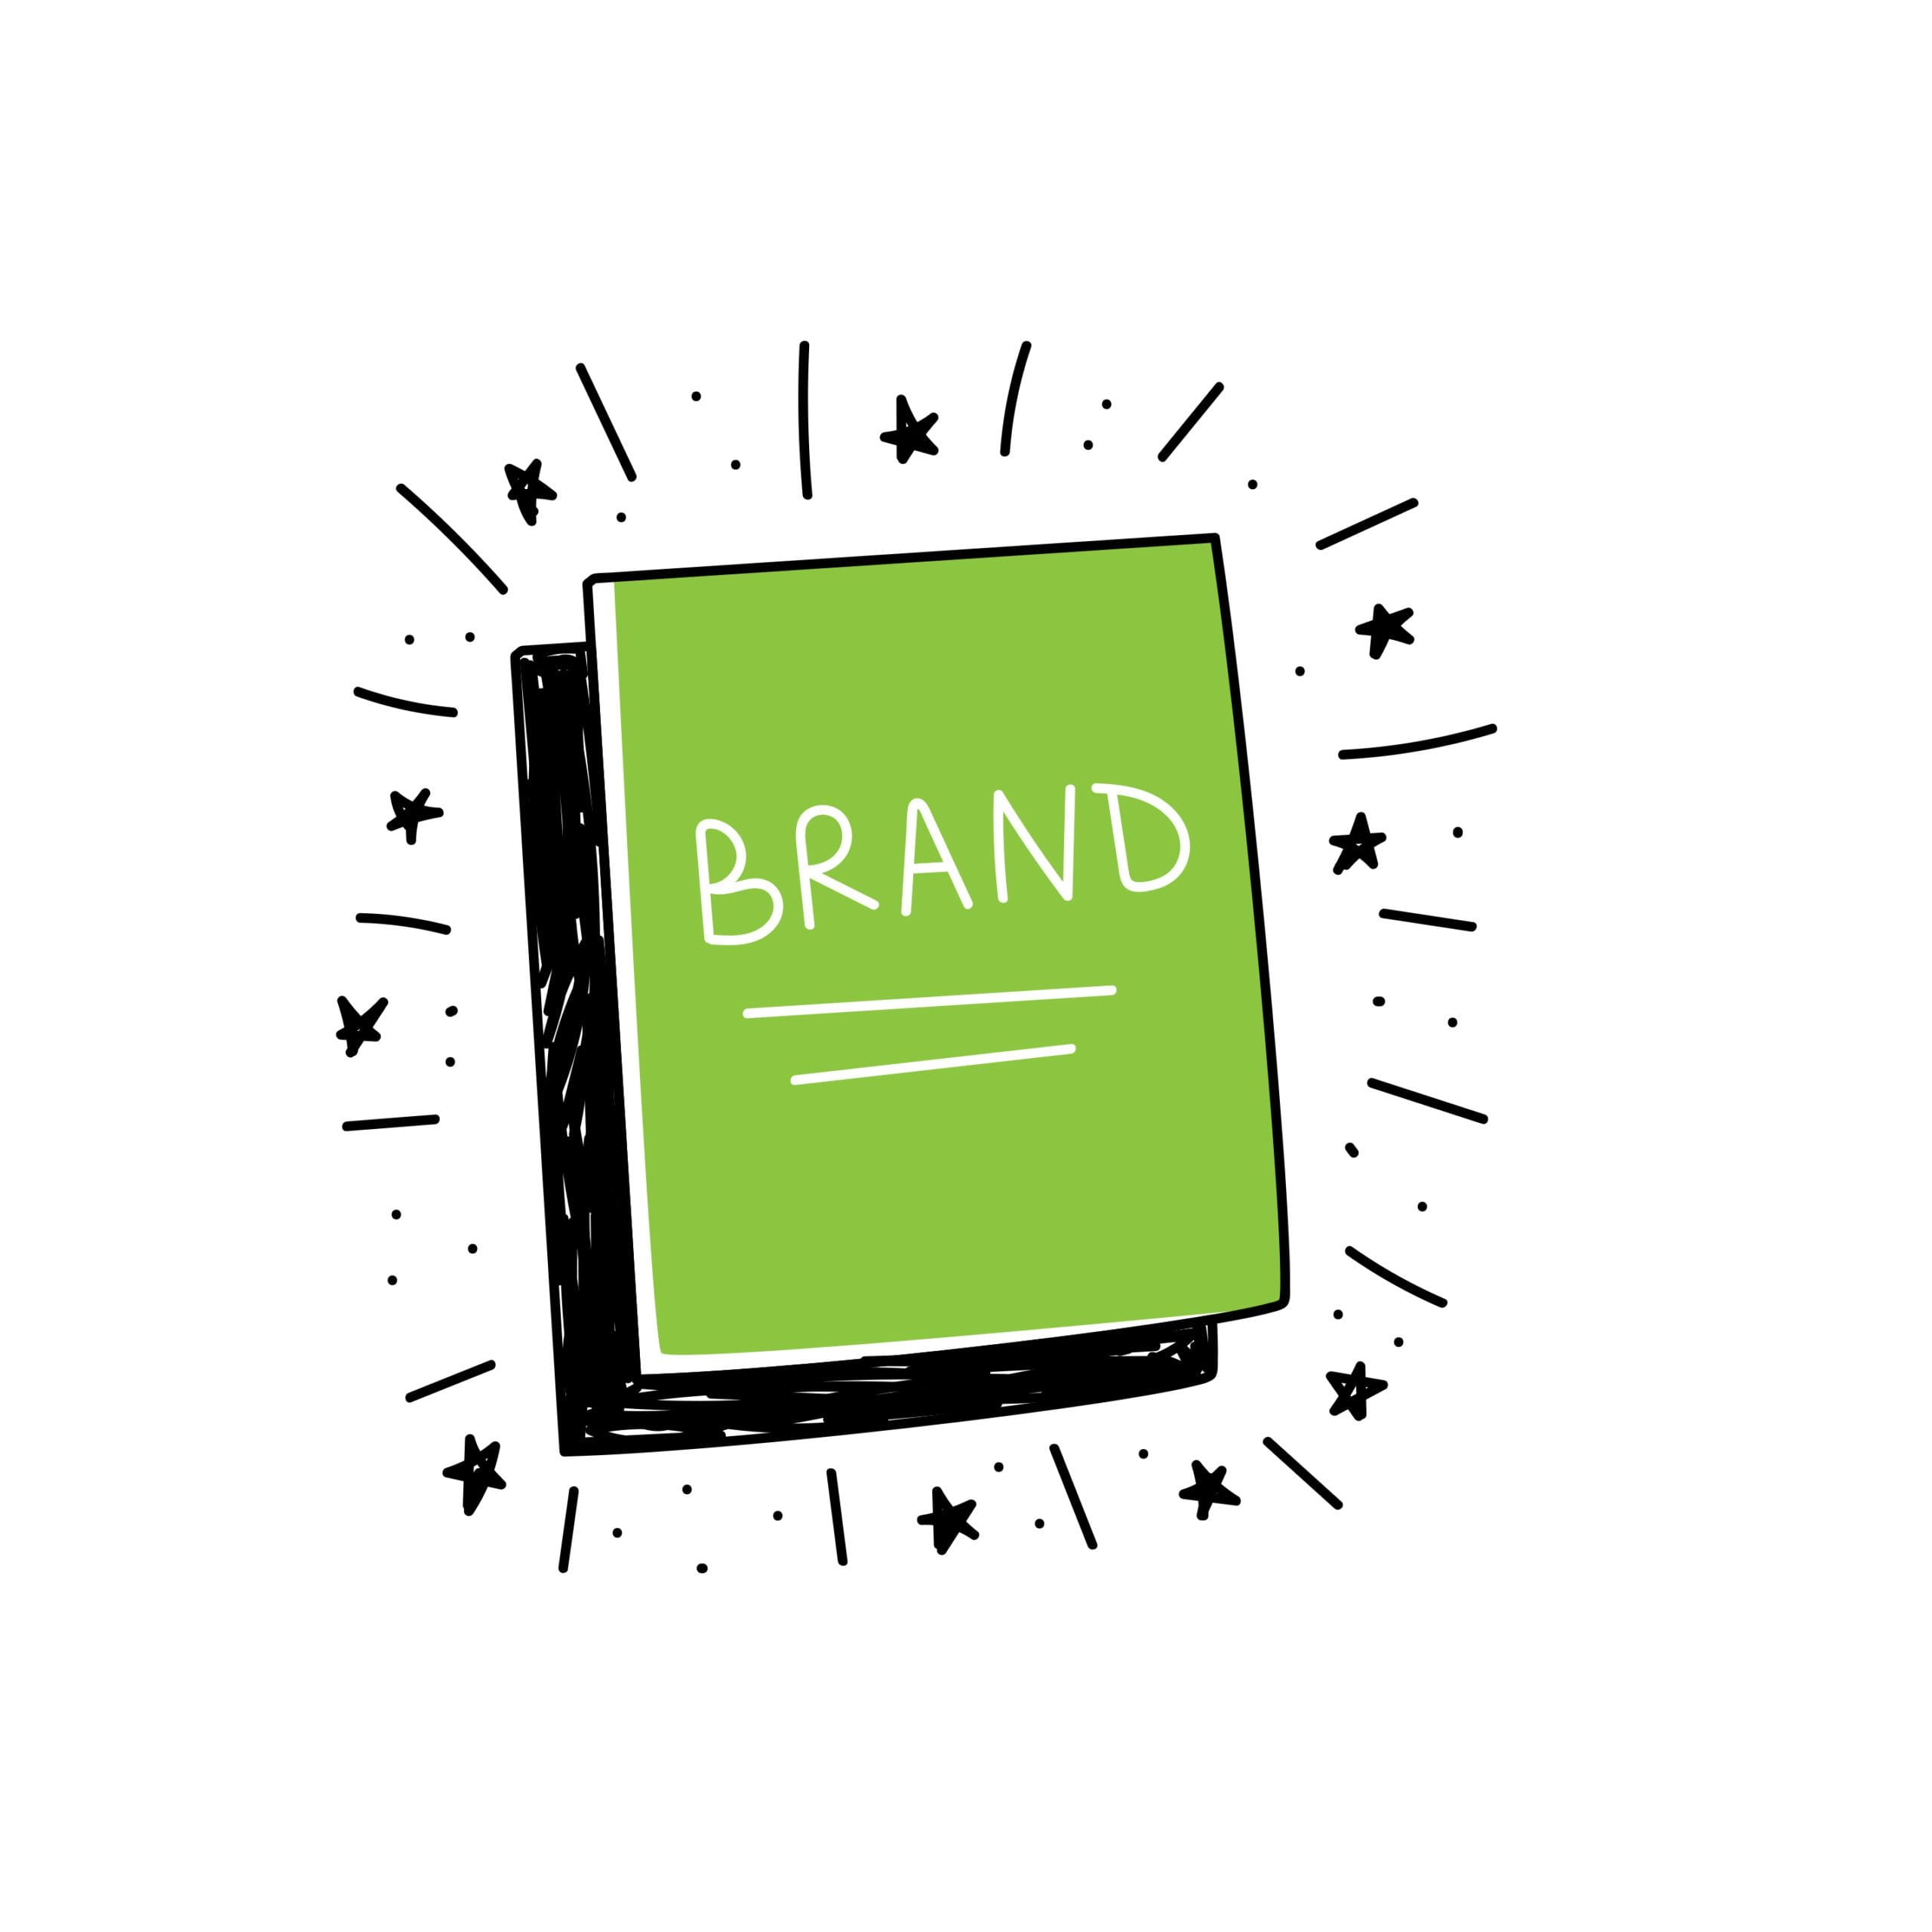 brand, branding, b2b marketing